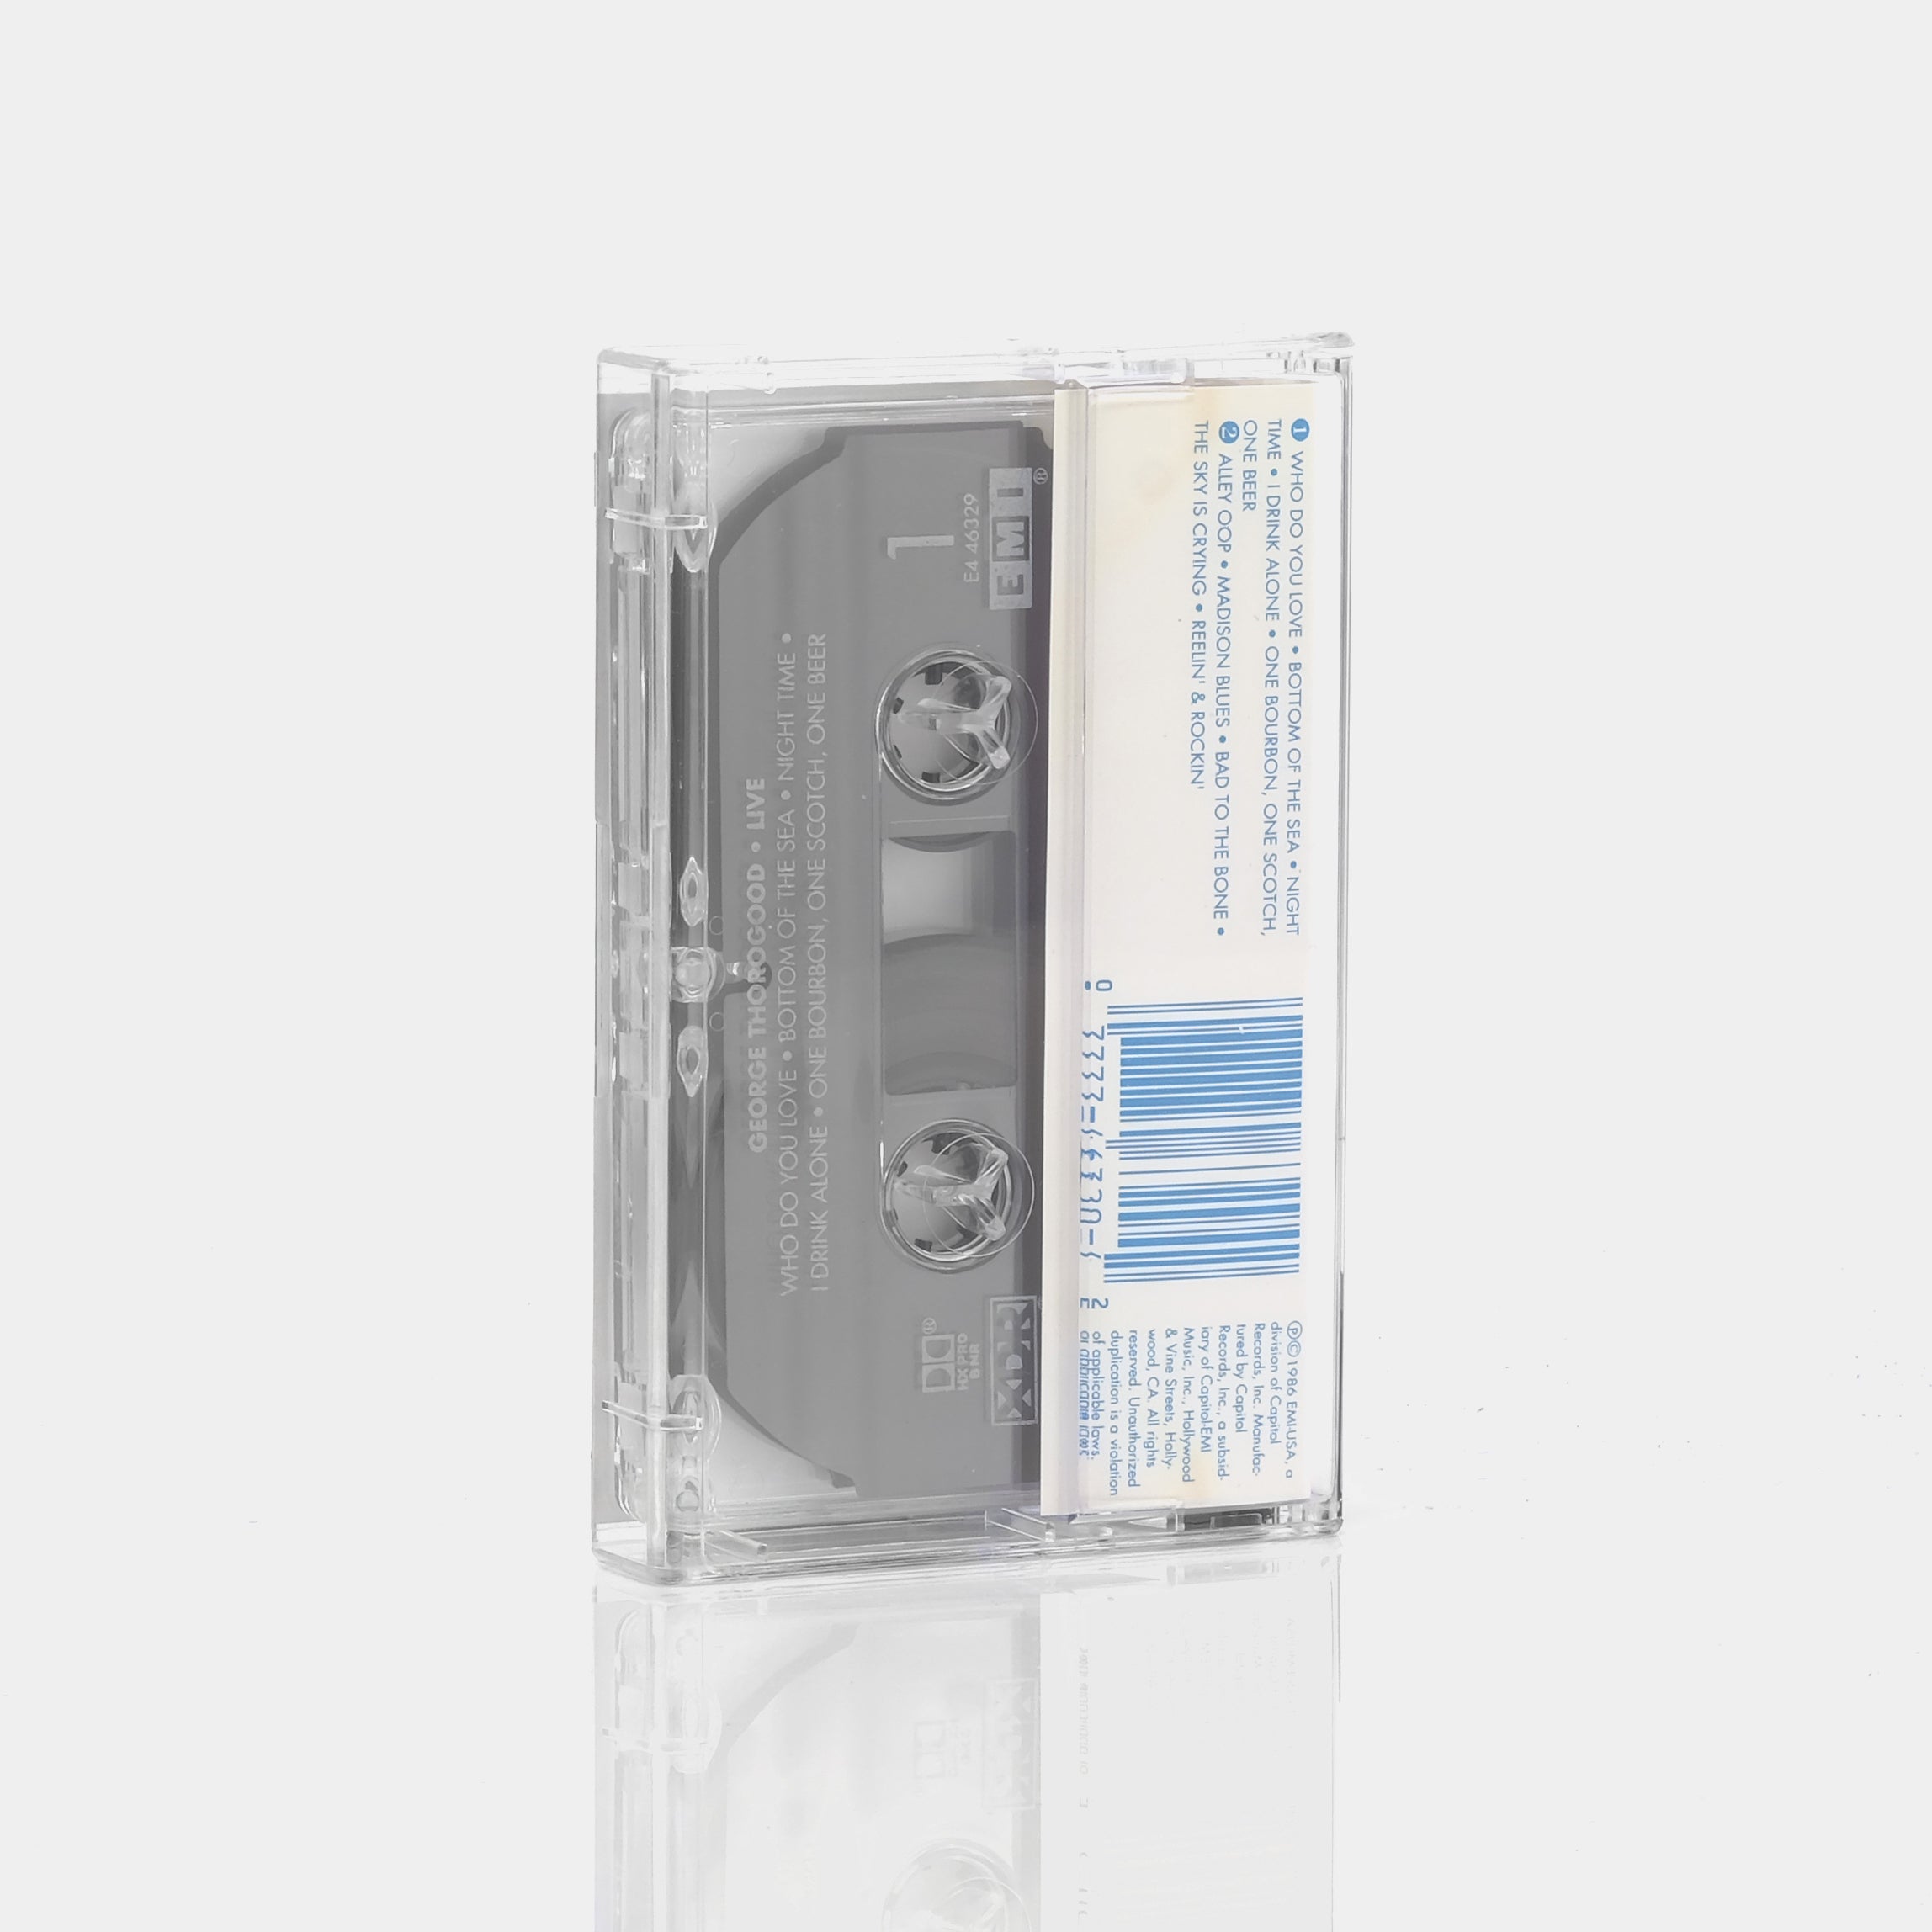 George Thorogood - Live Cassette Tape